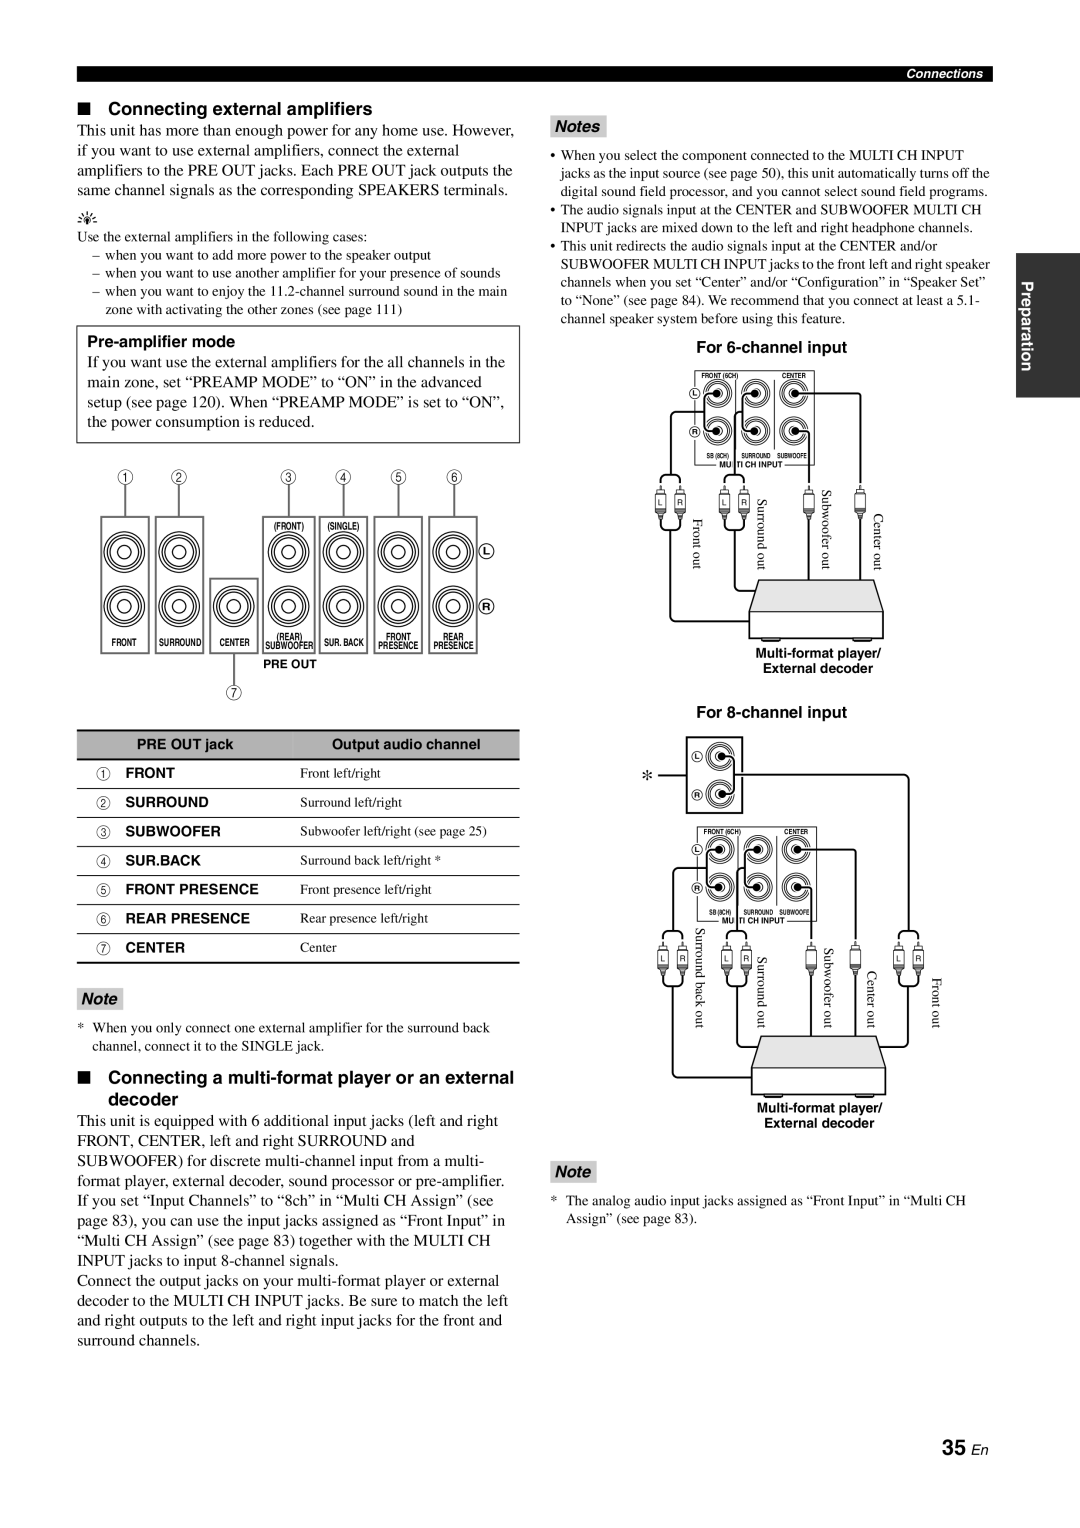 Yamaha DSP-Z11 35 En, Connecting external amplifiers, Connecting a multi-formatplayer or an external, decoder, Preparation 